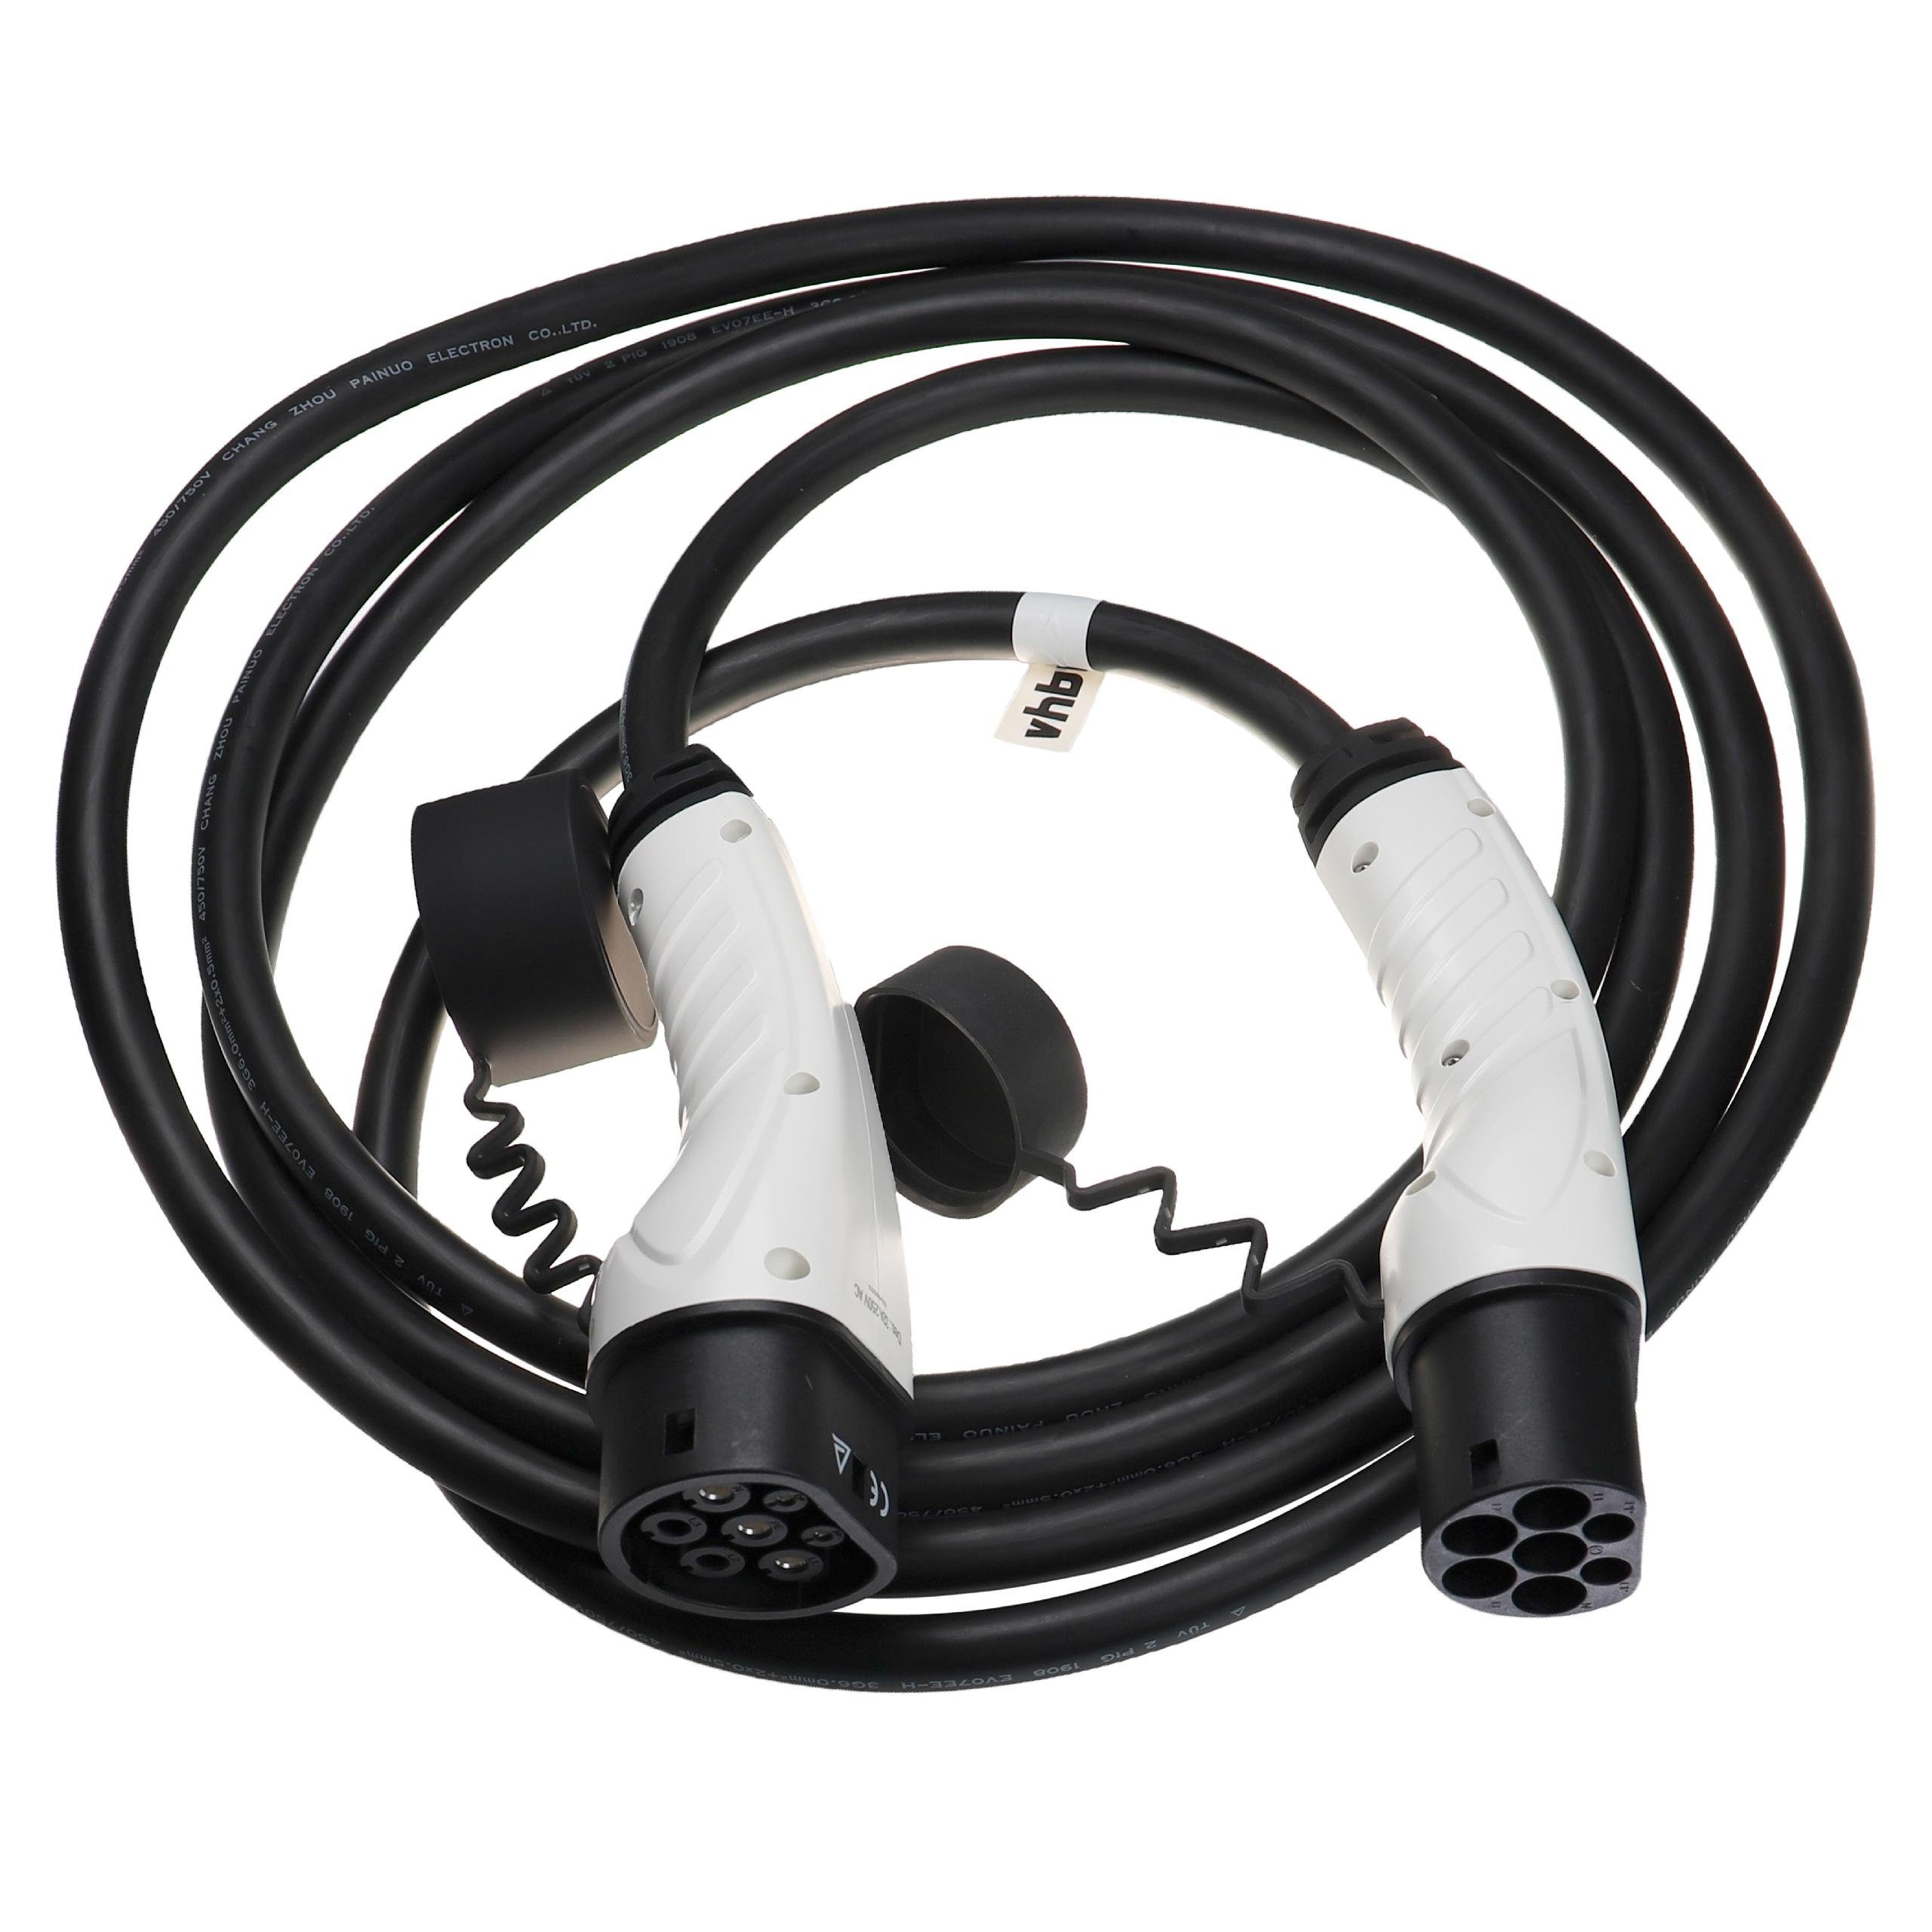 passend MINI Hybrid In Elektro-Kabel Countryman Electric, vhbw Plug für Ladekabel